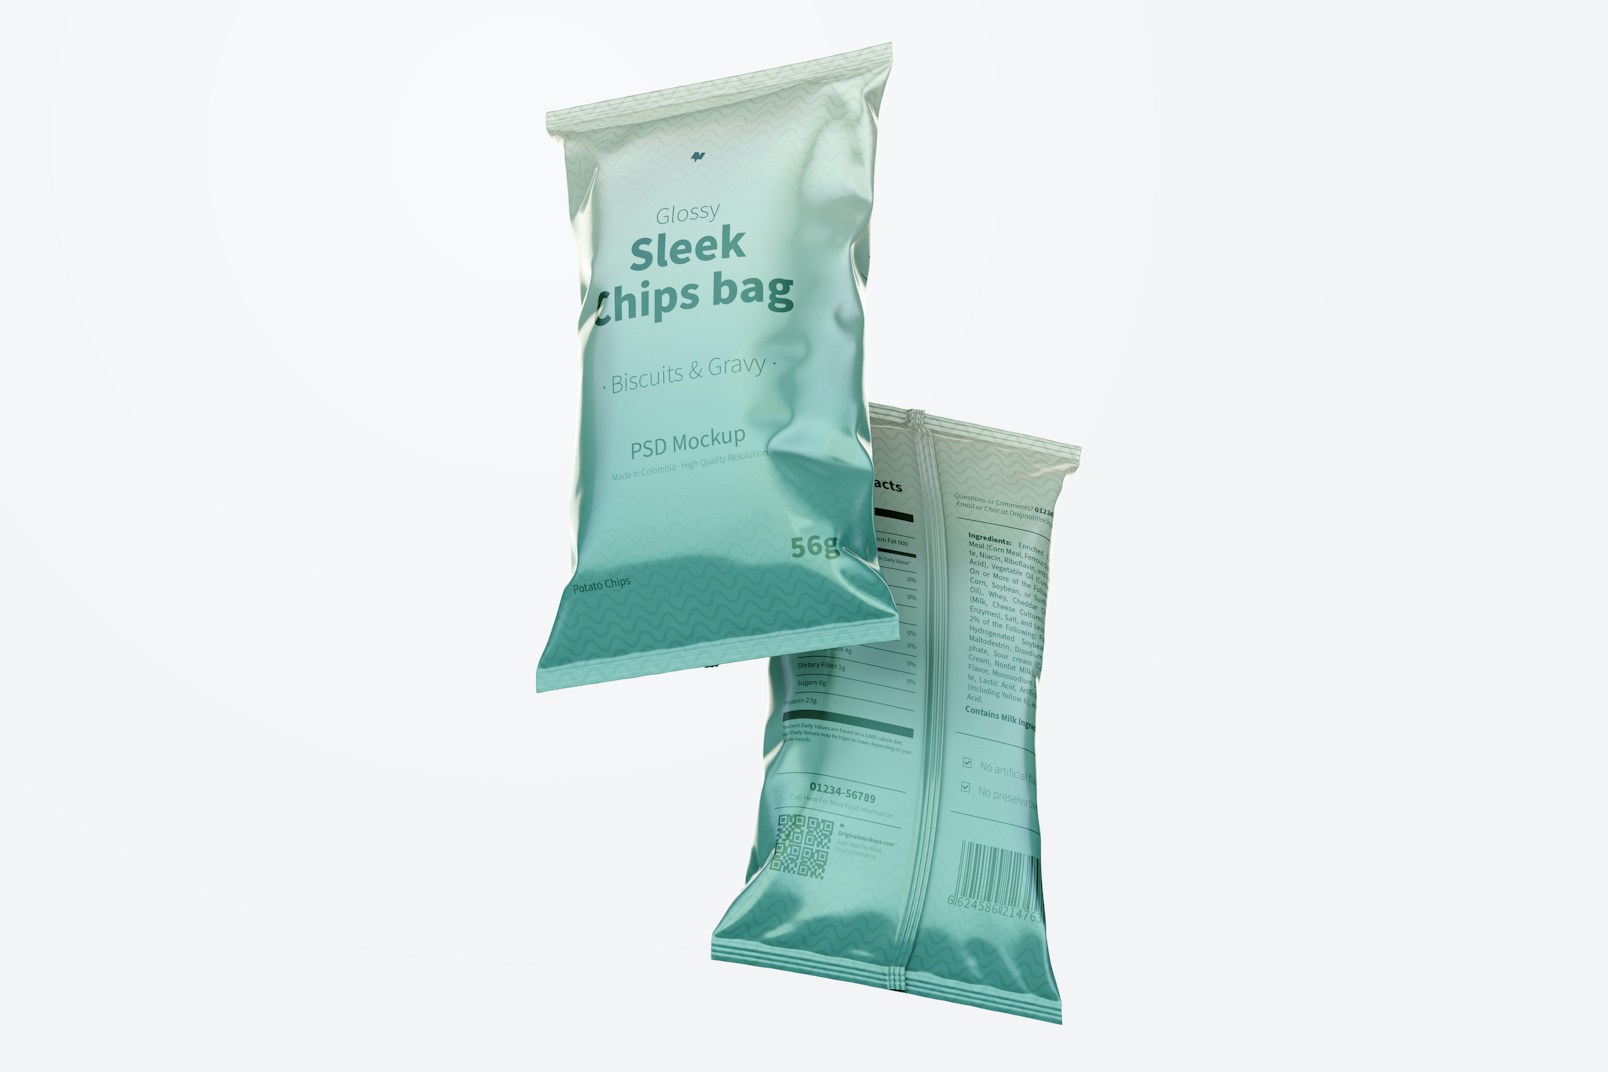 Glossy Sleek Chips Bags Mockup